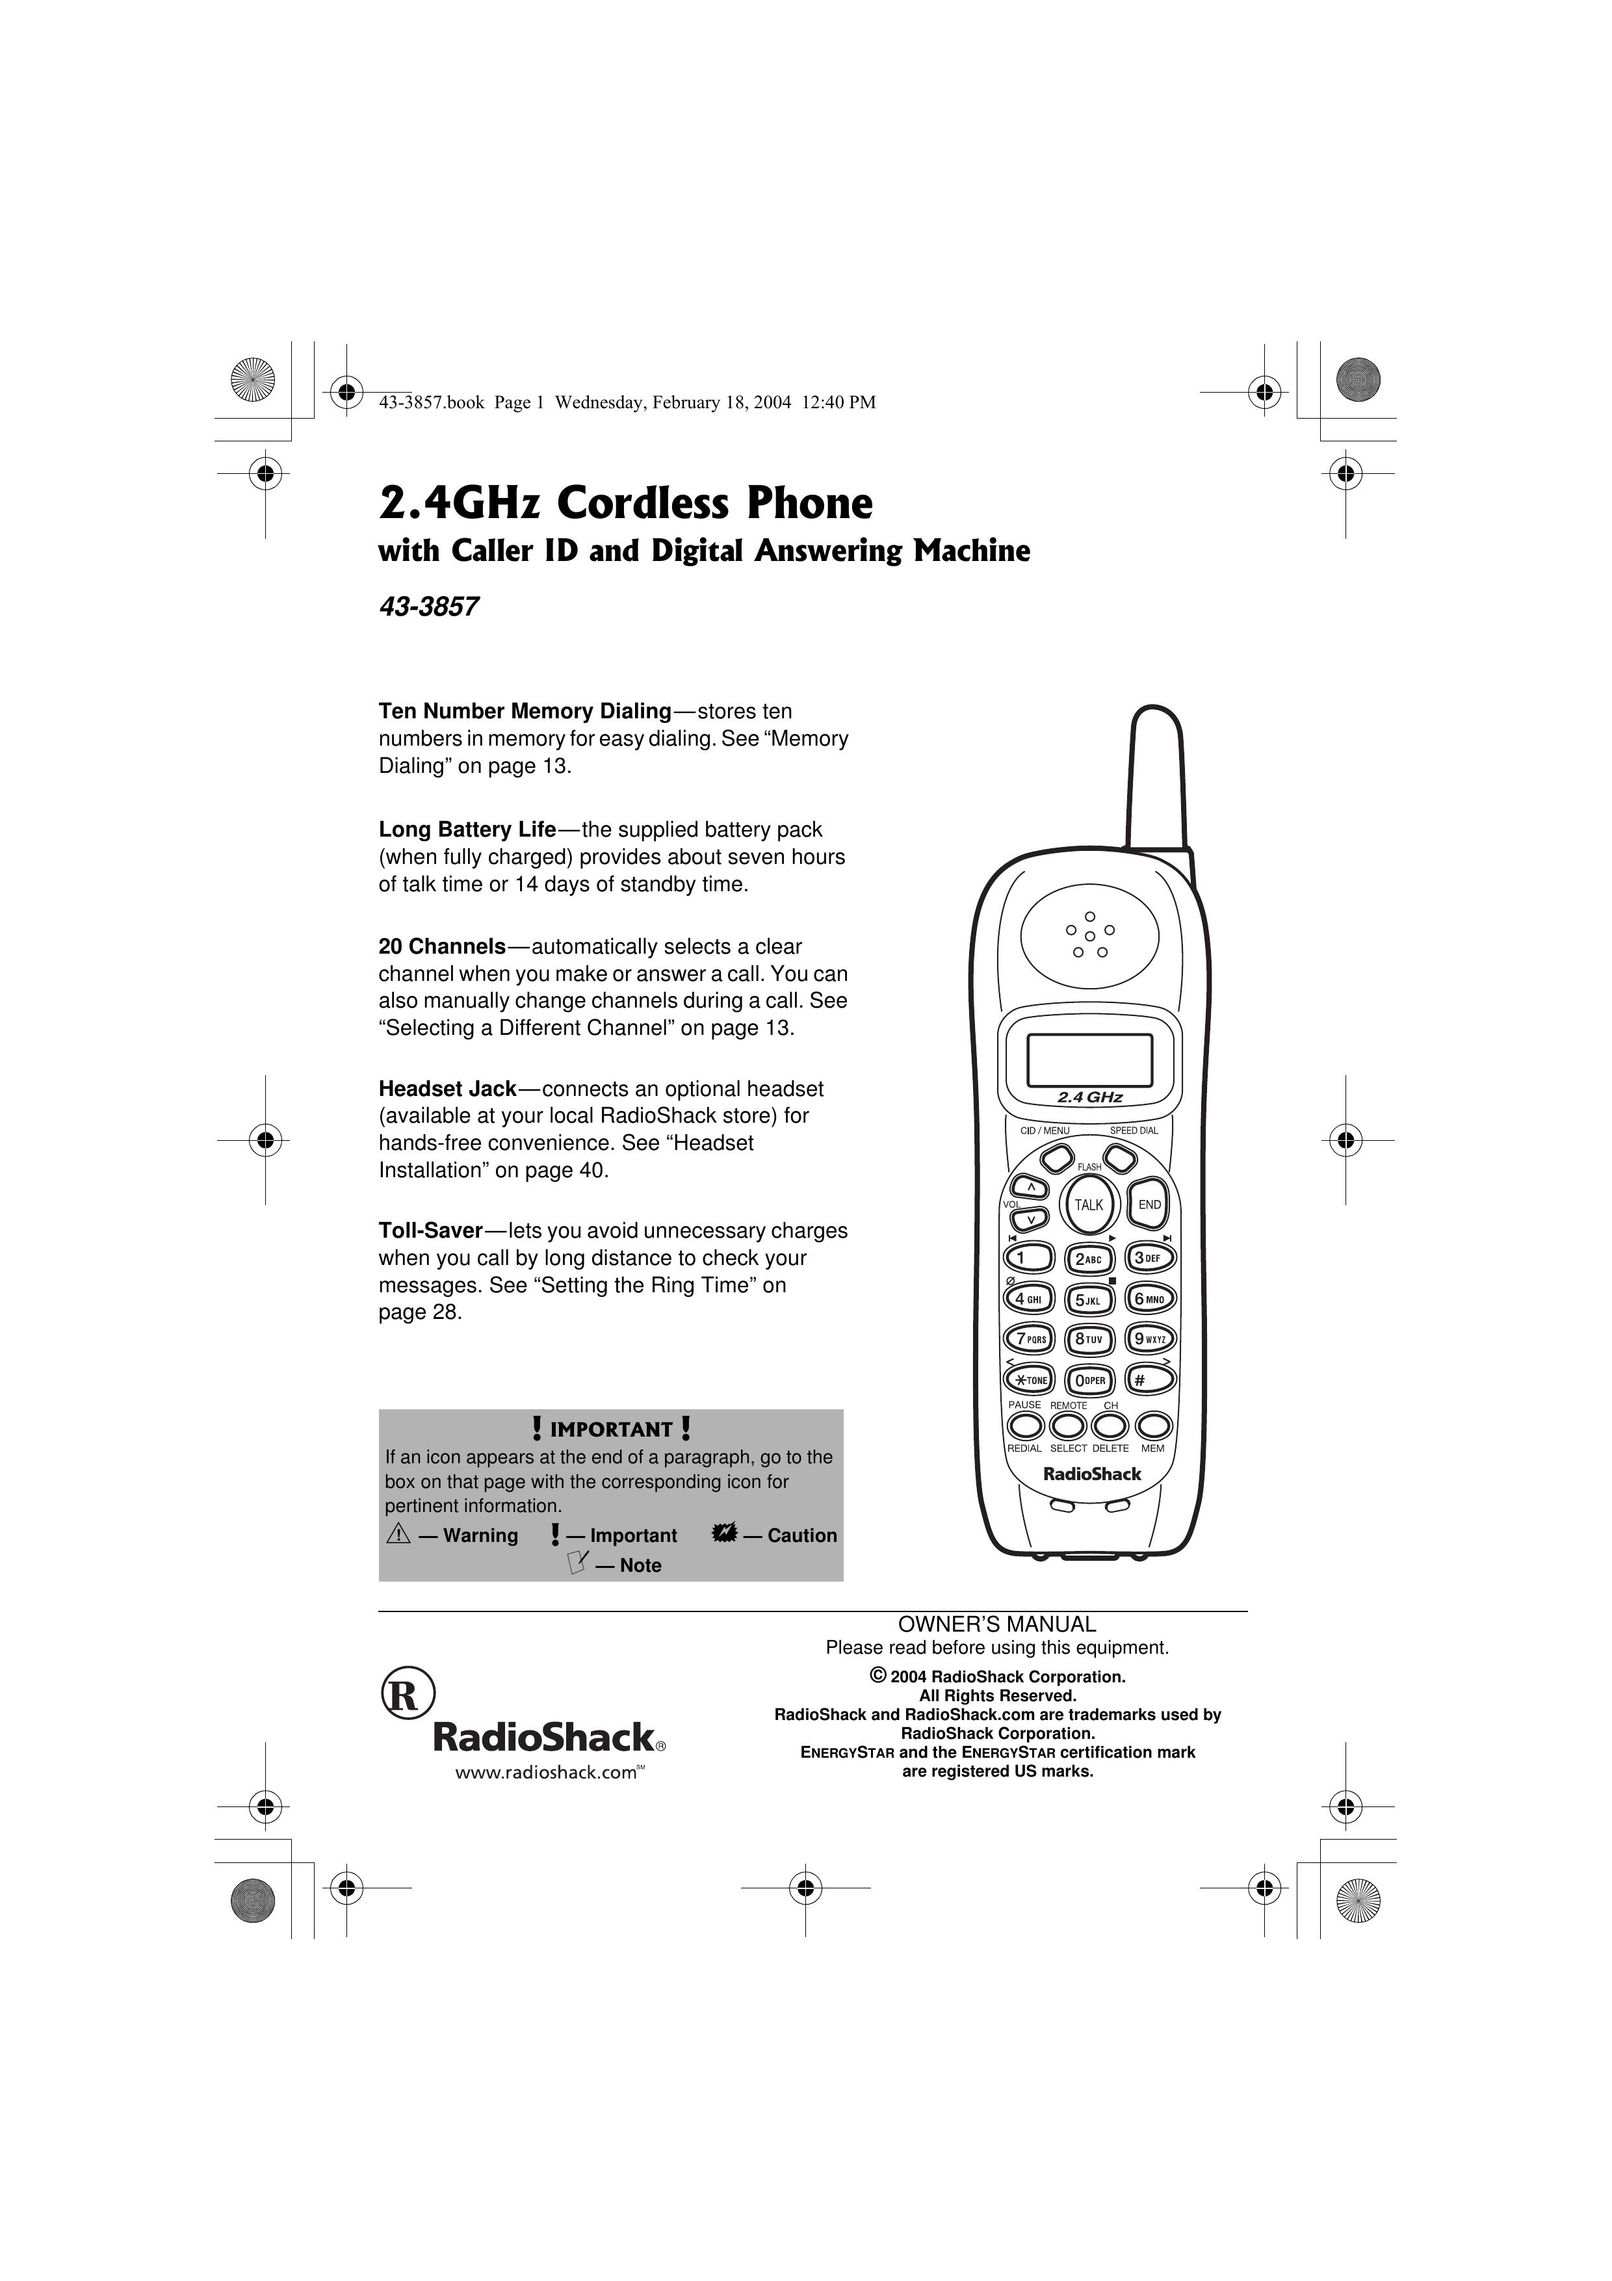 Radio Shack 43-3857 Two-Way Radio User Manual